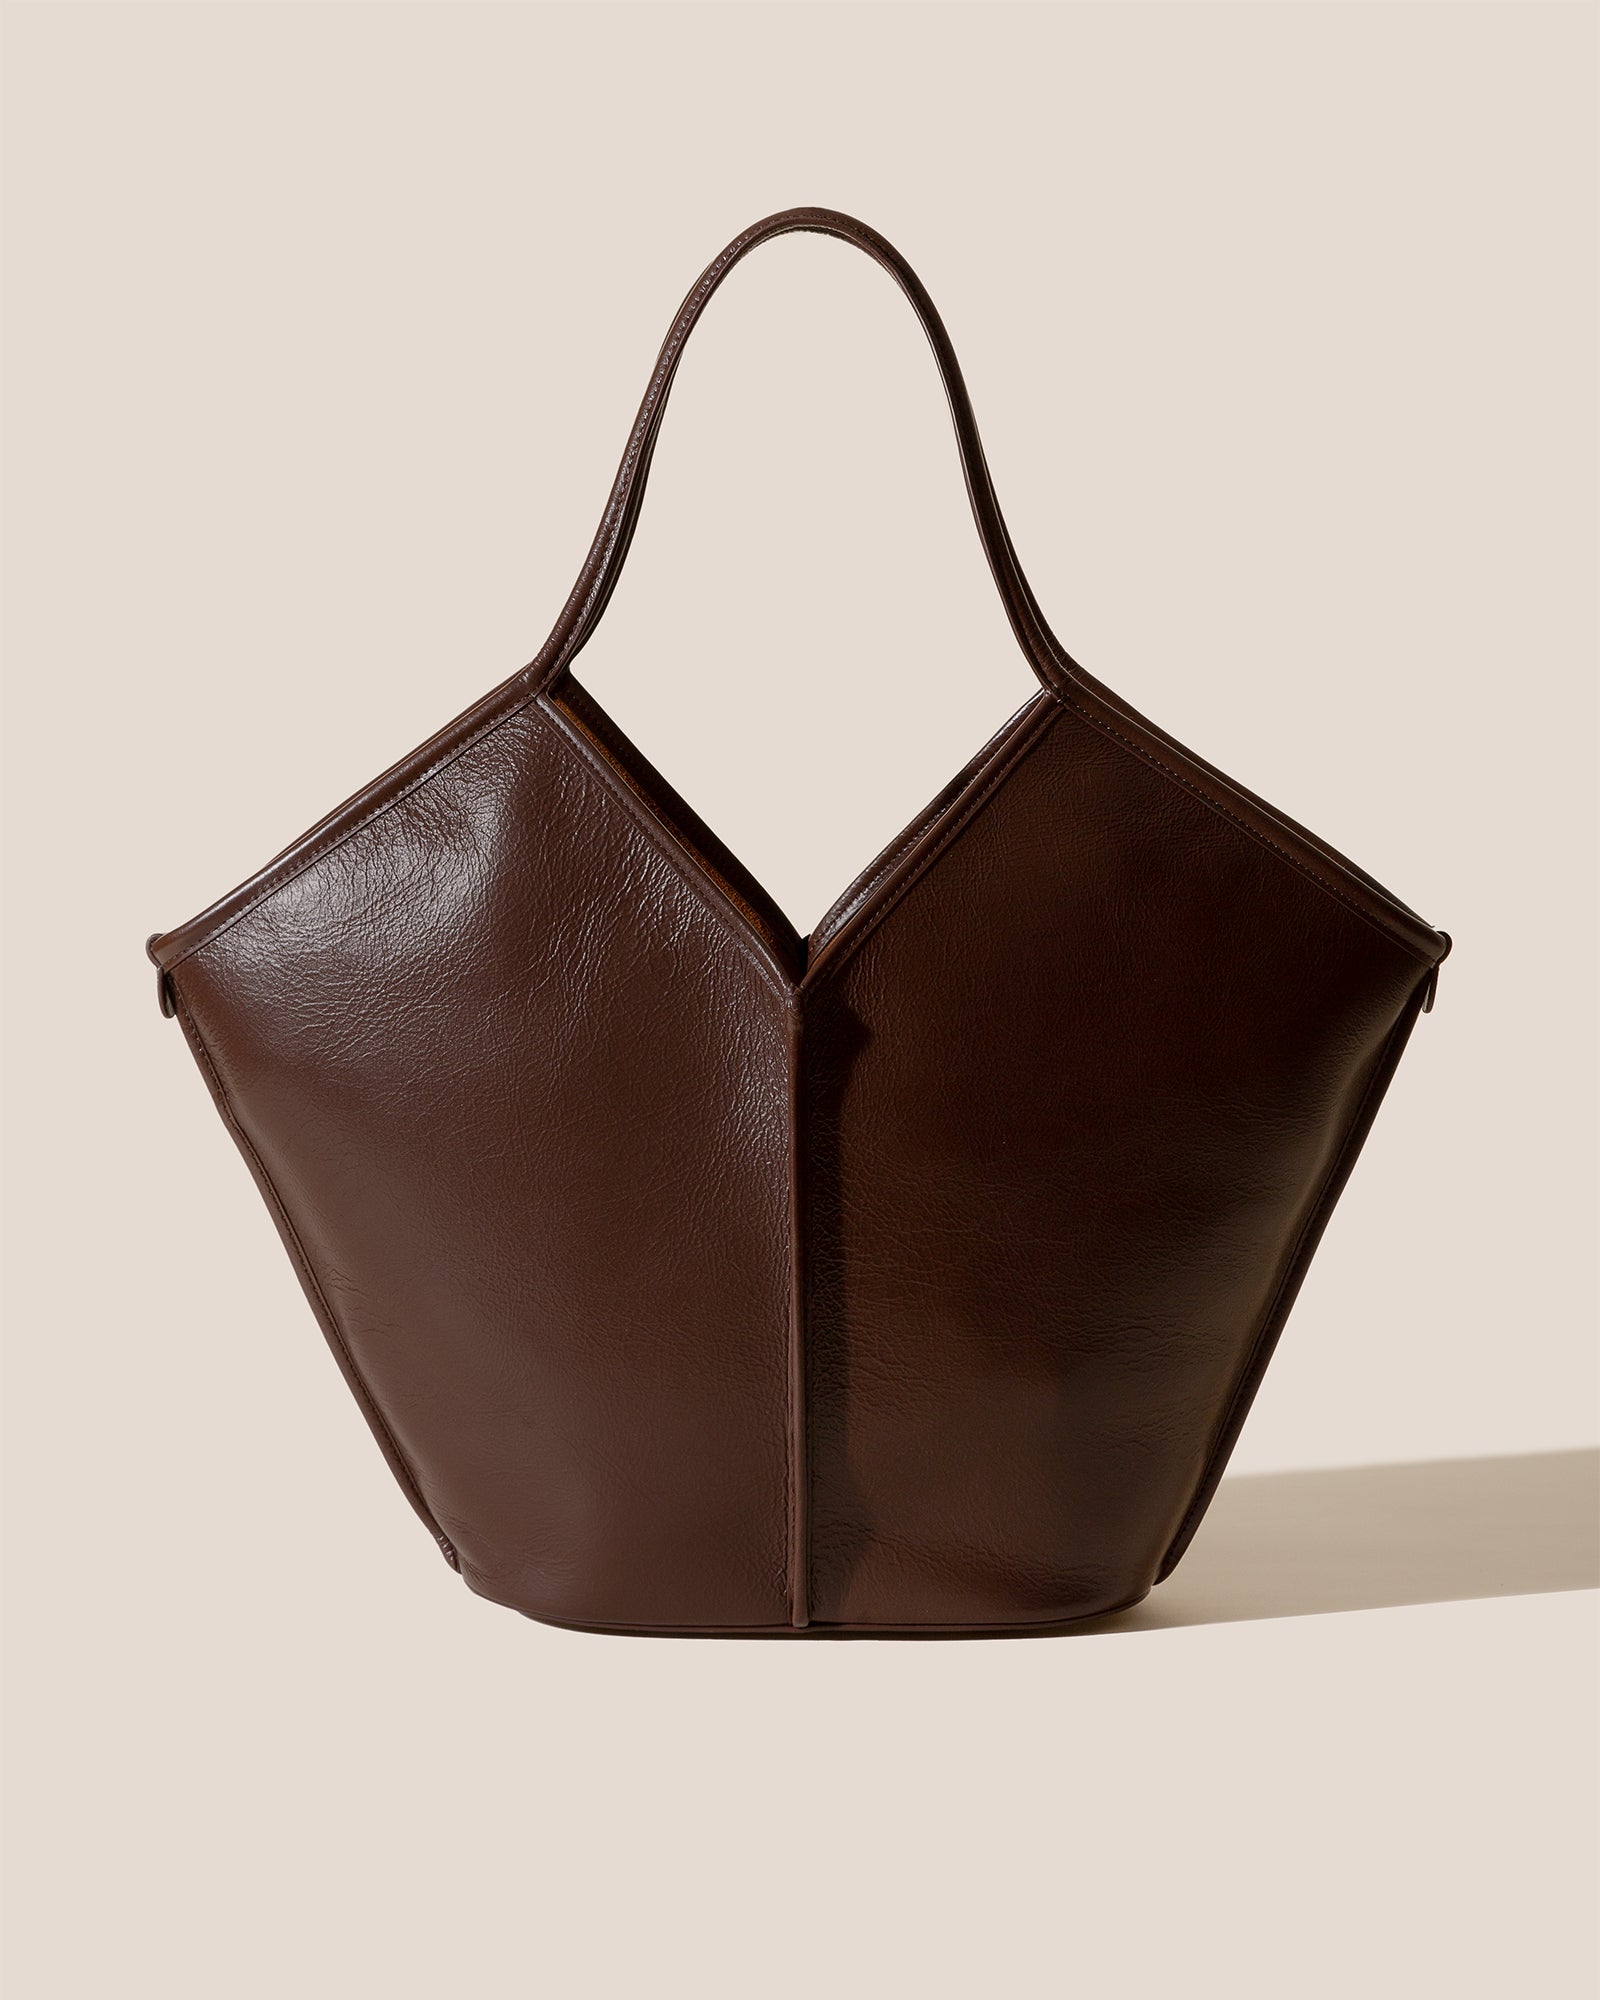 Bottega Veneta® Women's The Medium Brown Bag in Kraft. Shop online